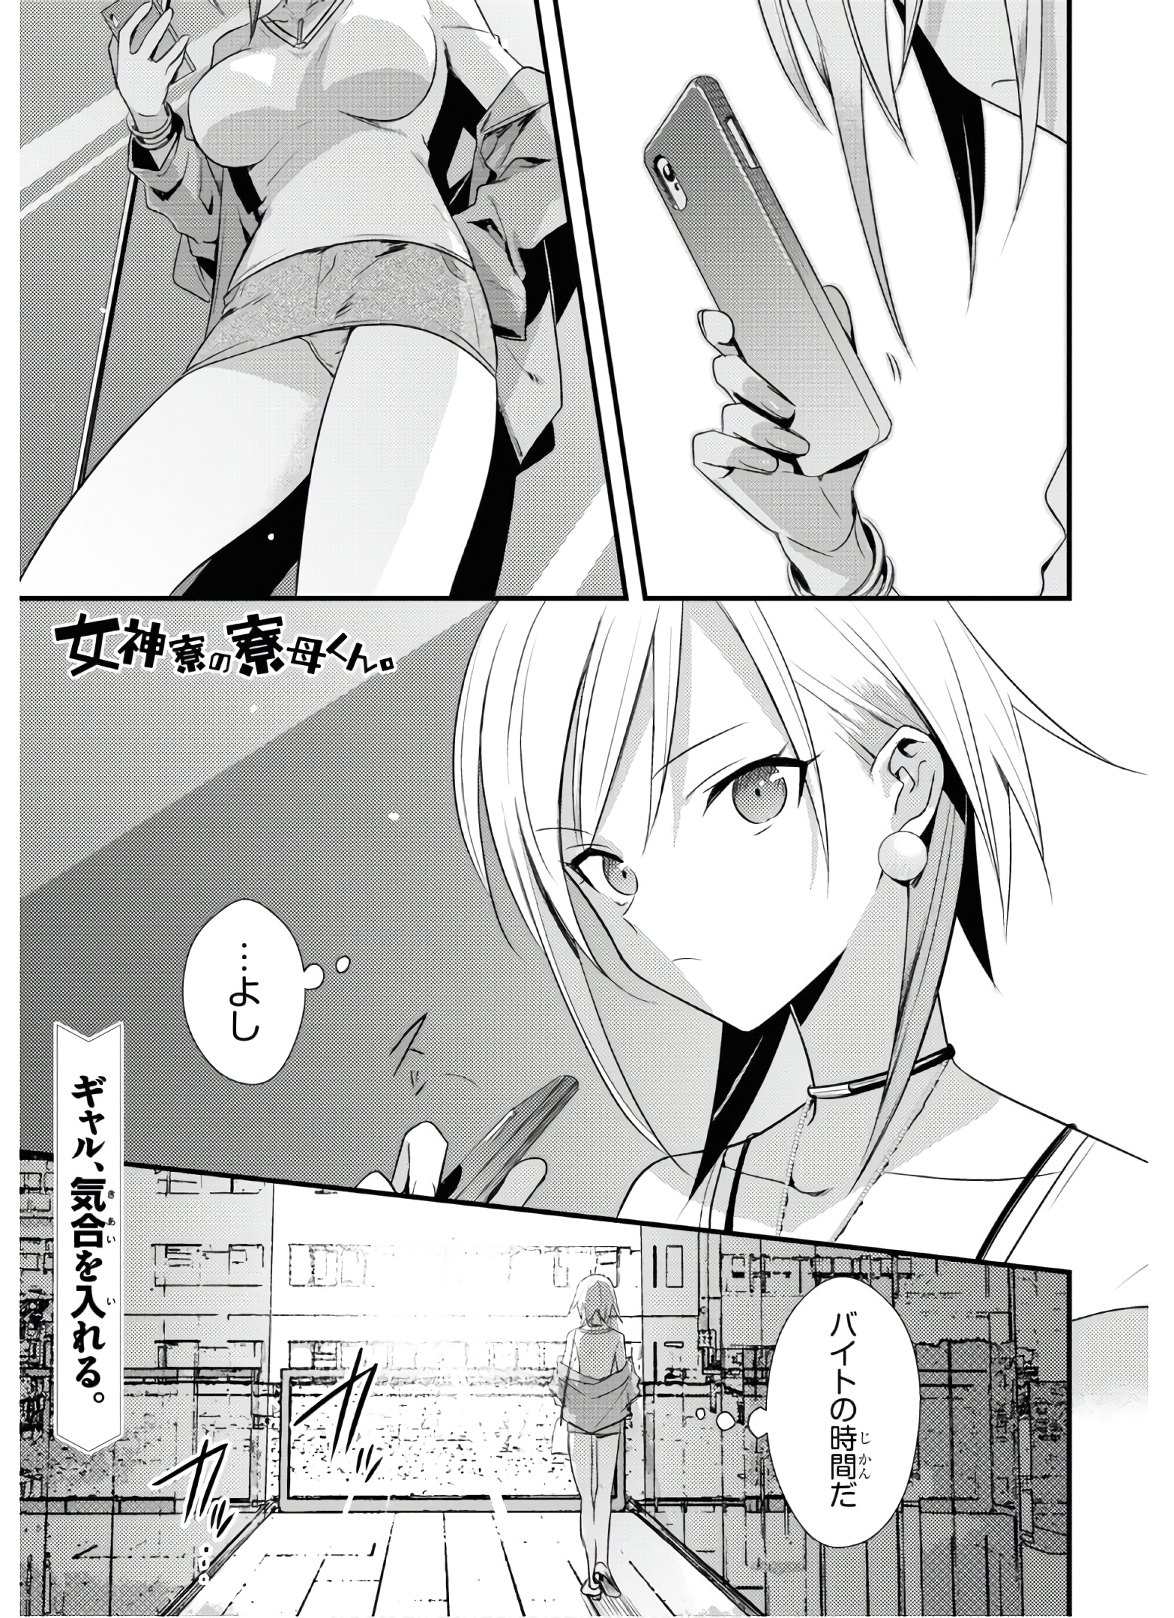 Megami-ryou no Ryoubo-kun - Chapter 38 - Page 1